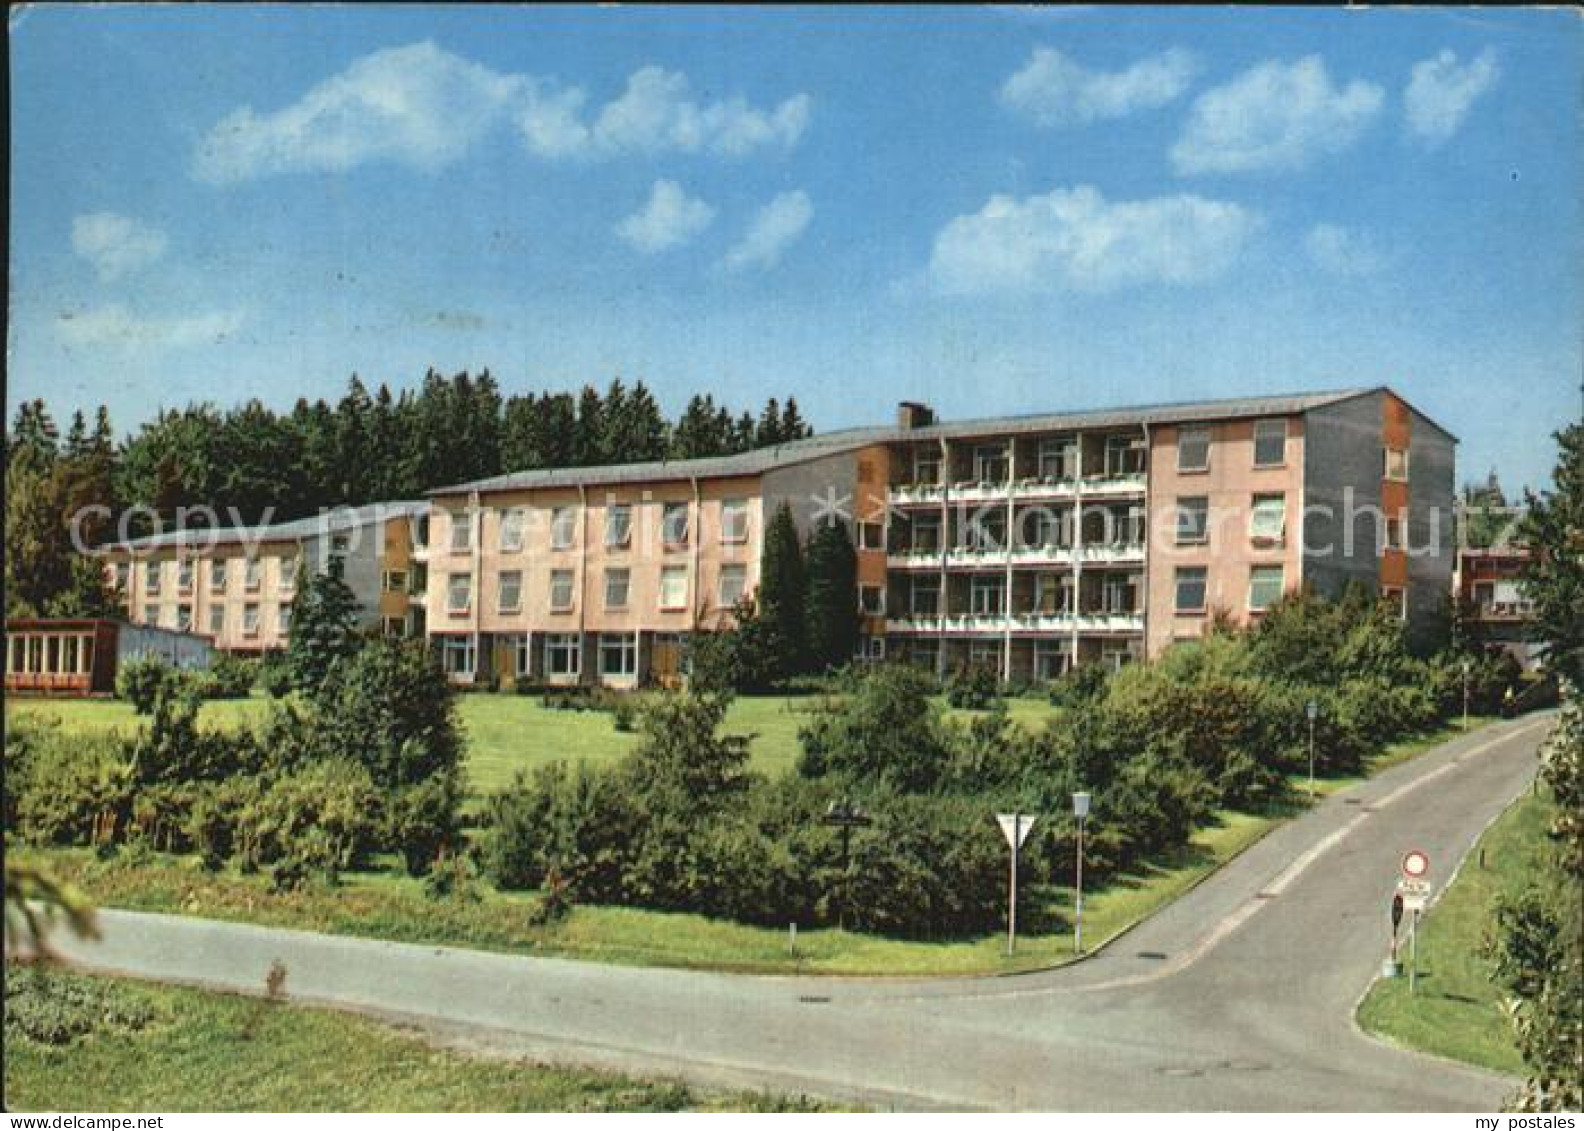 72597441 Bad Steben LVA-Sanatorium Frankenwarte Bad Steben - Bad Steben